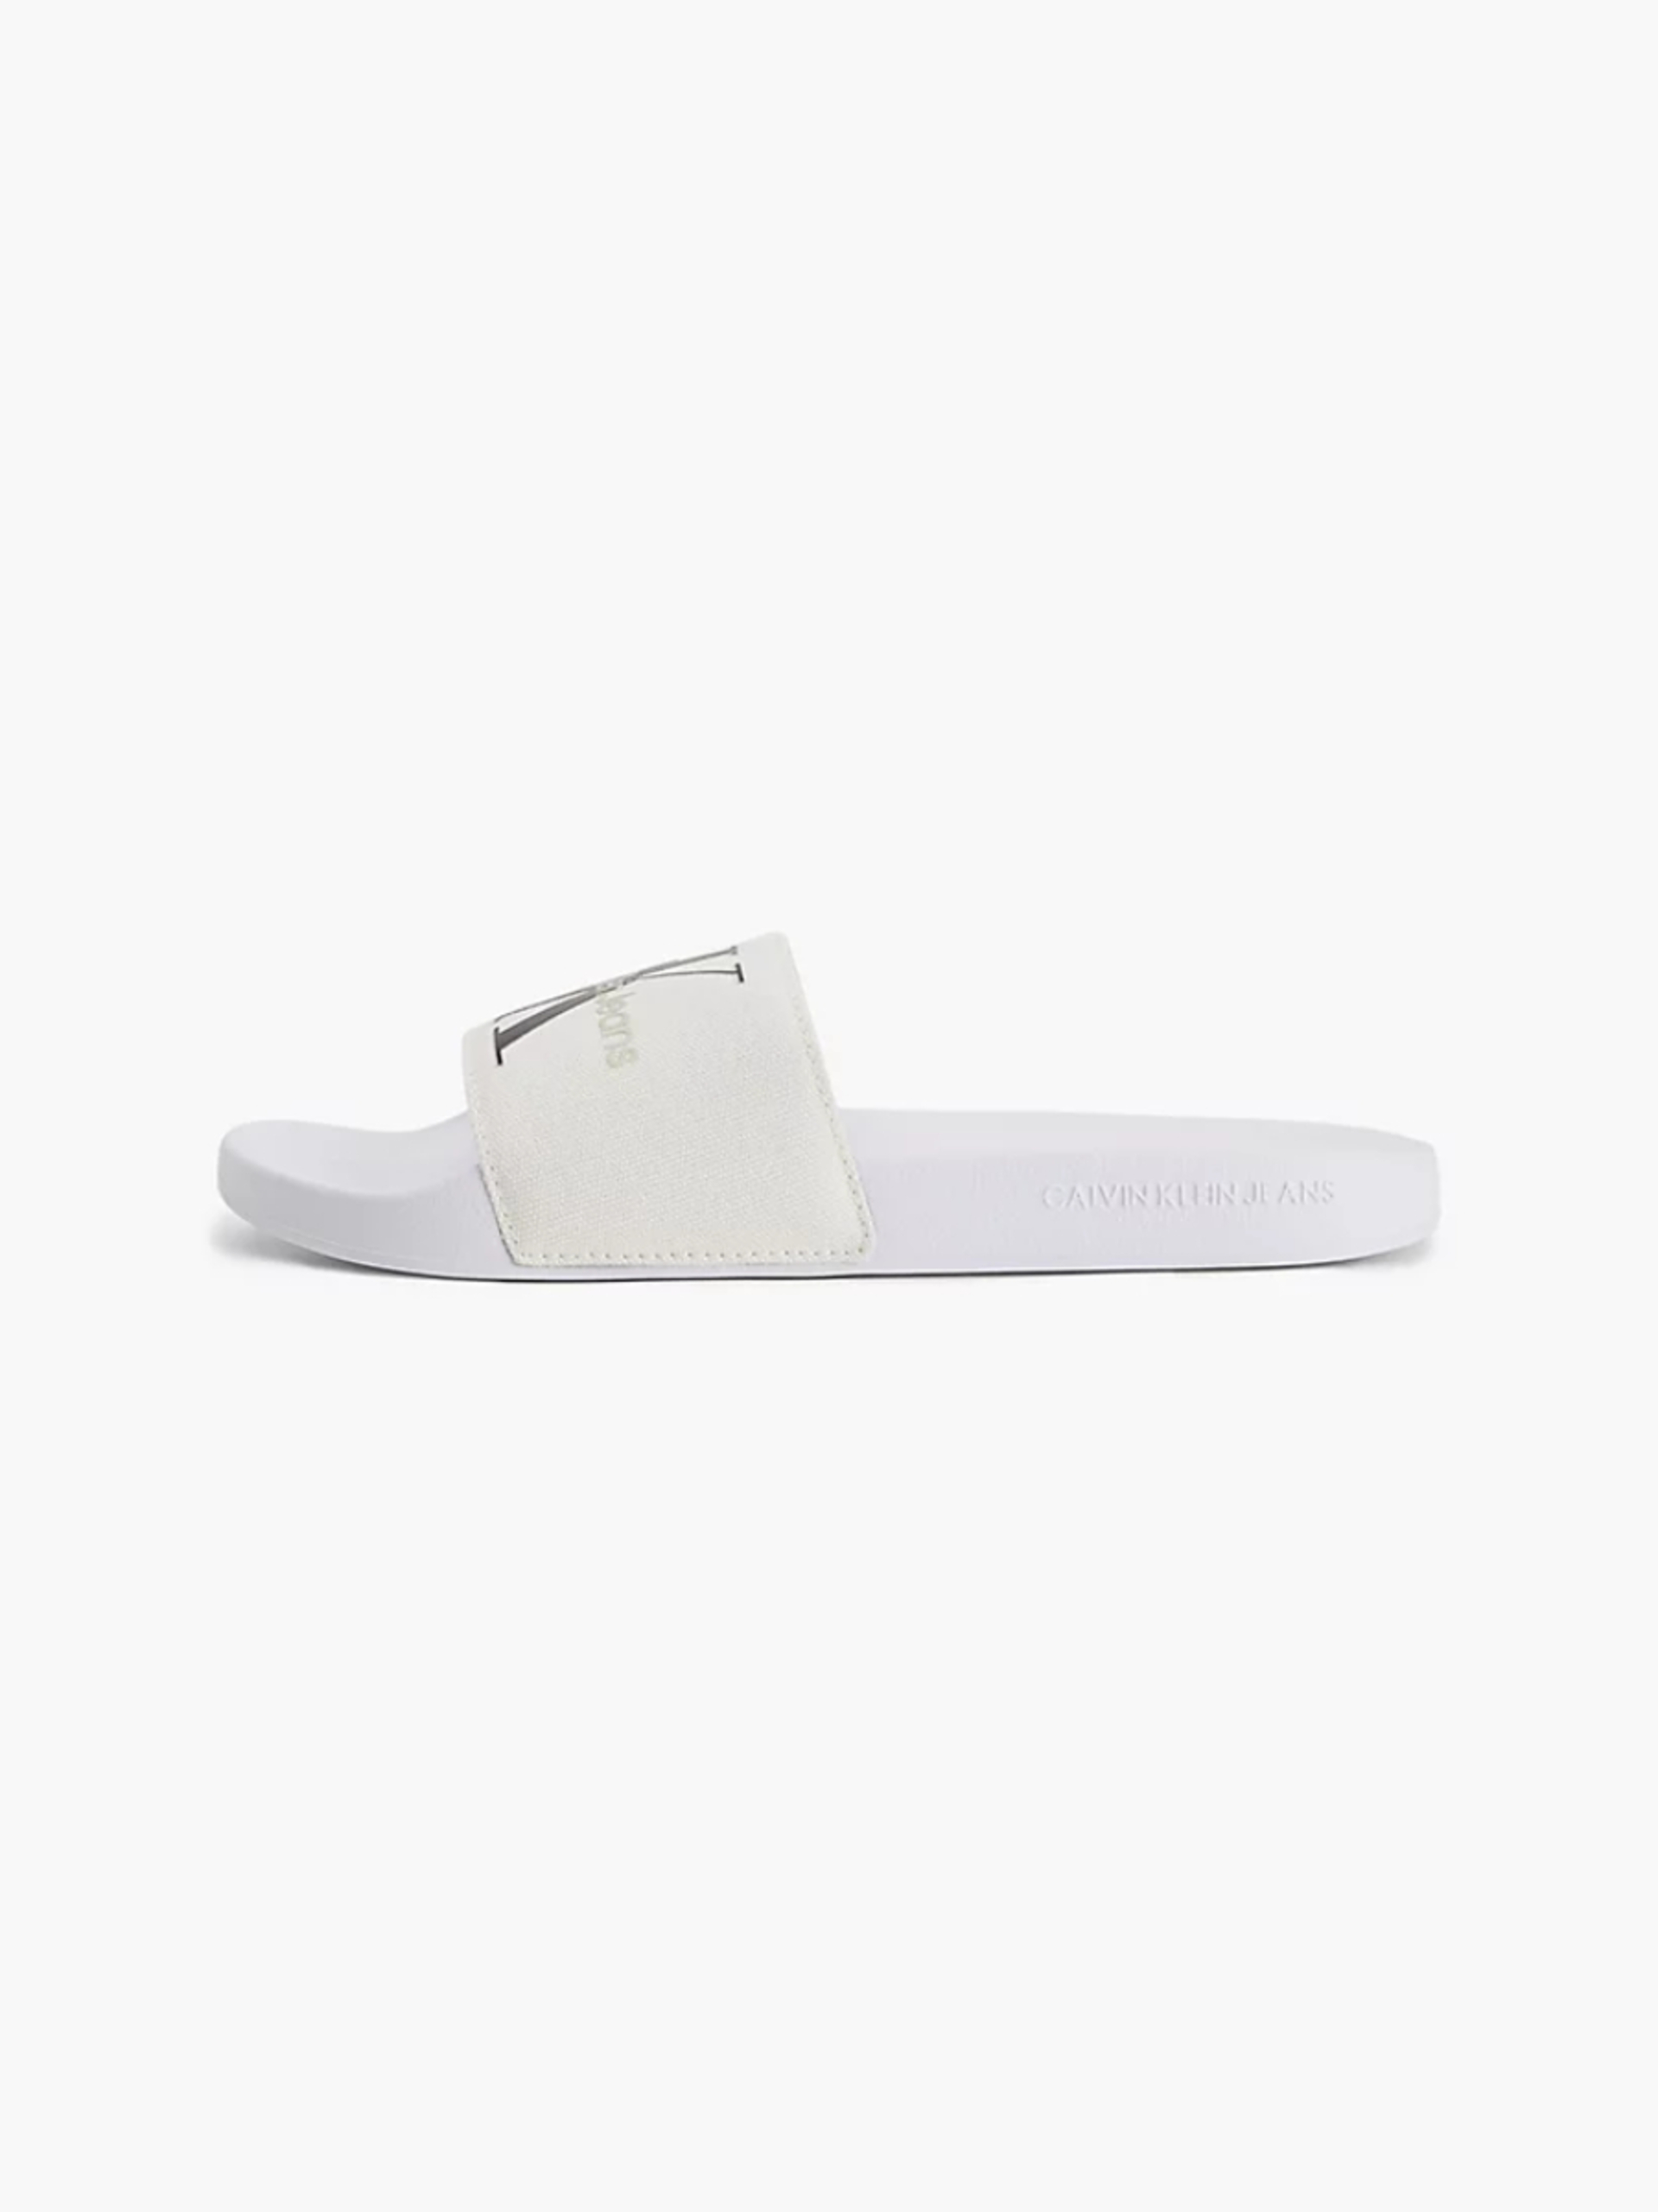 Calvin Klein dámské bílé pantofle - 38 (YAF)